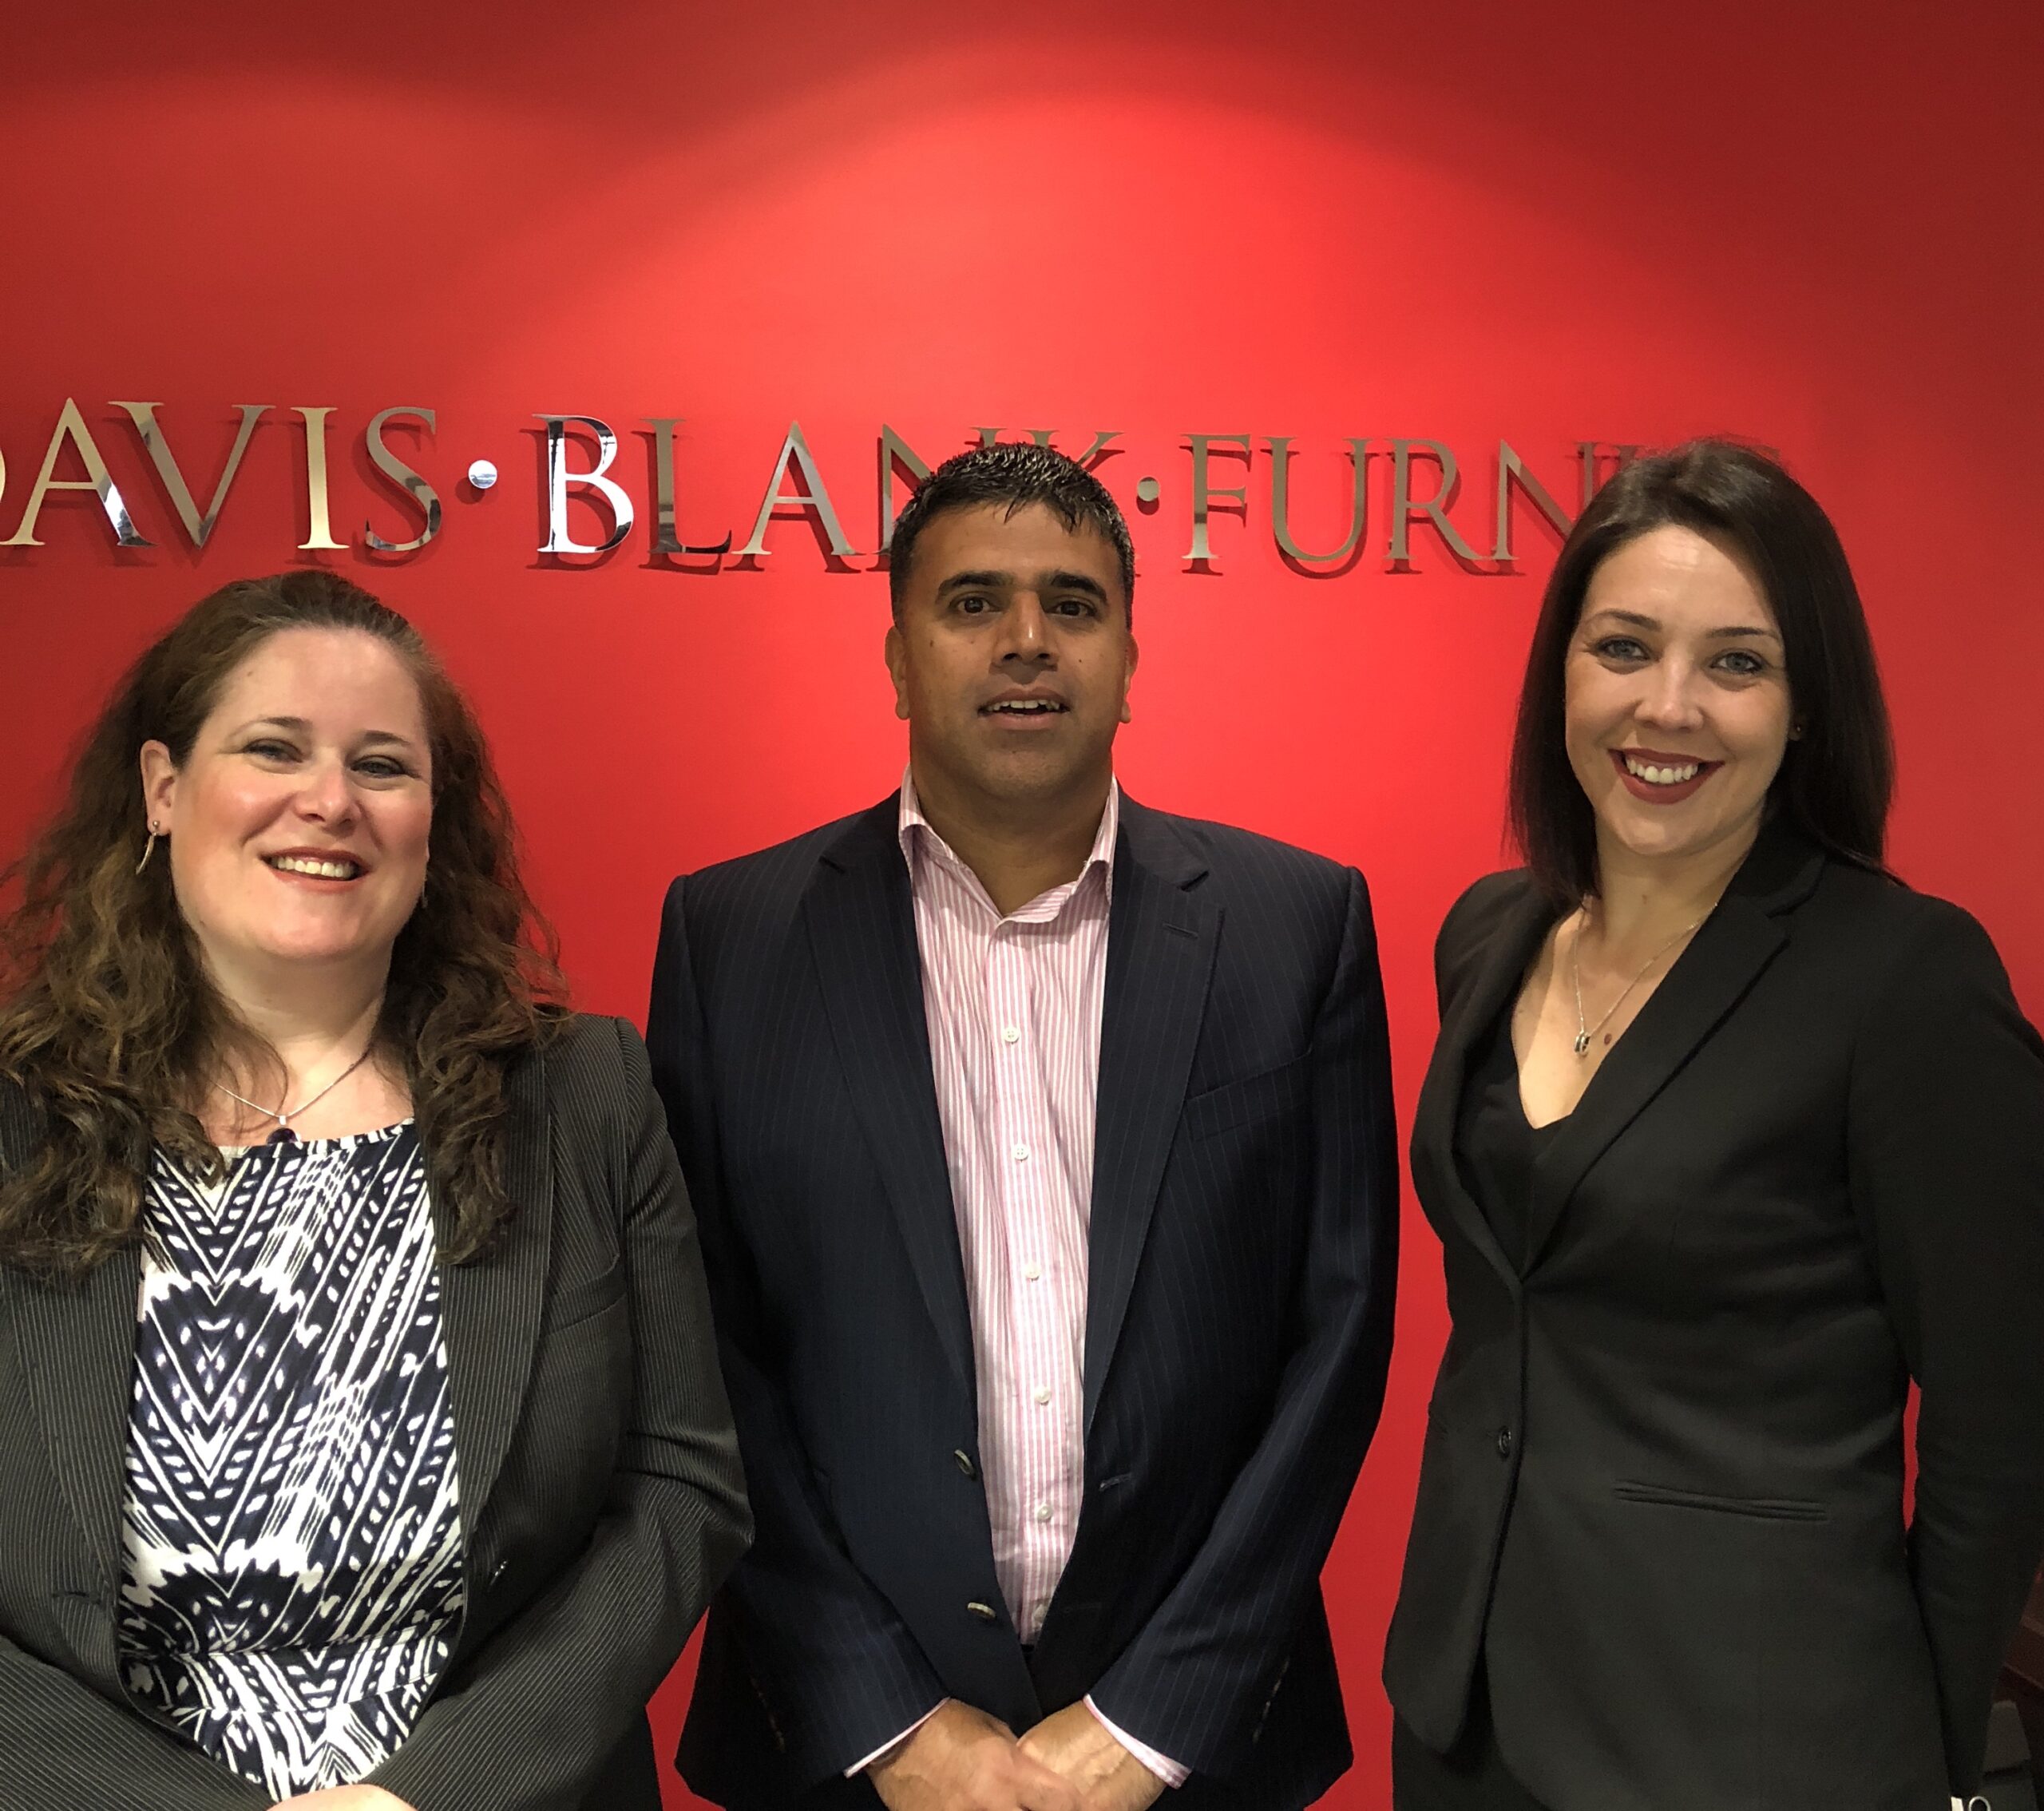 Kirsty Morbey, Sonio Singh and Caroline Bilous at Davis Blank Furniss